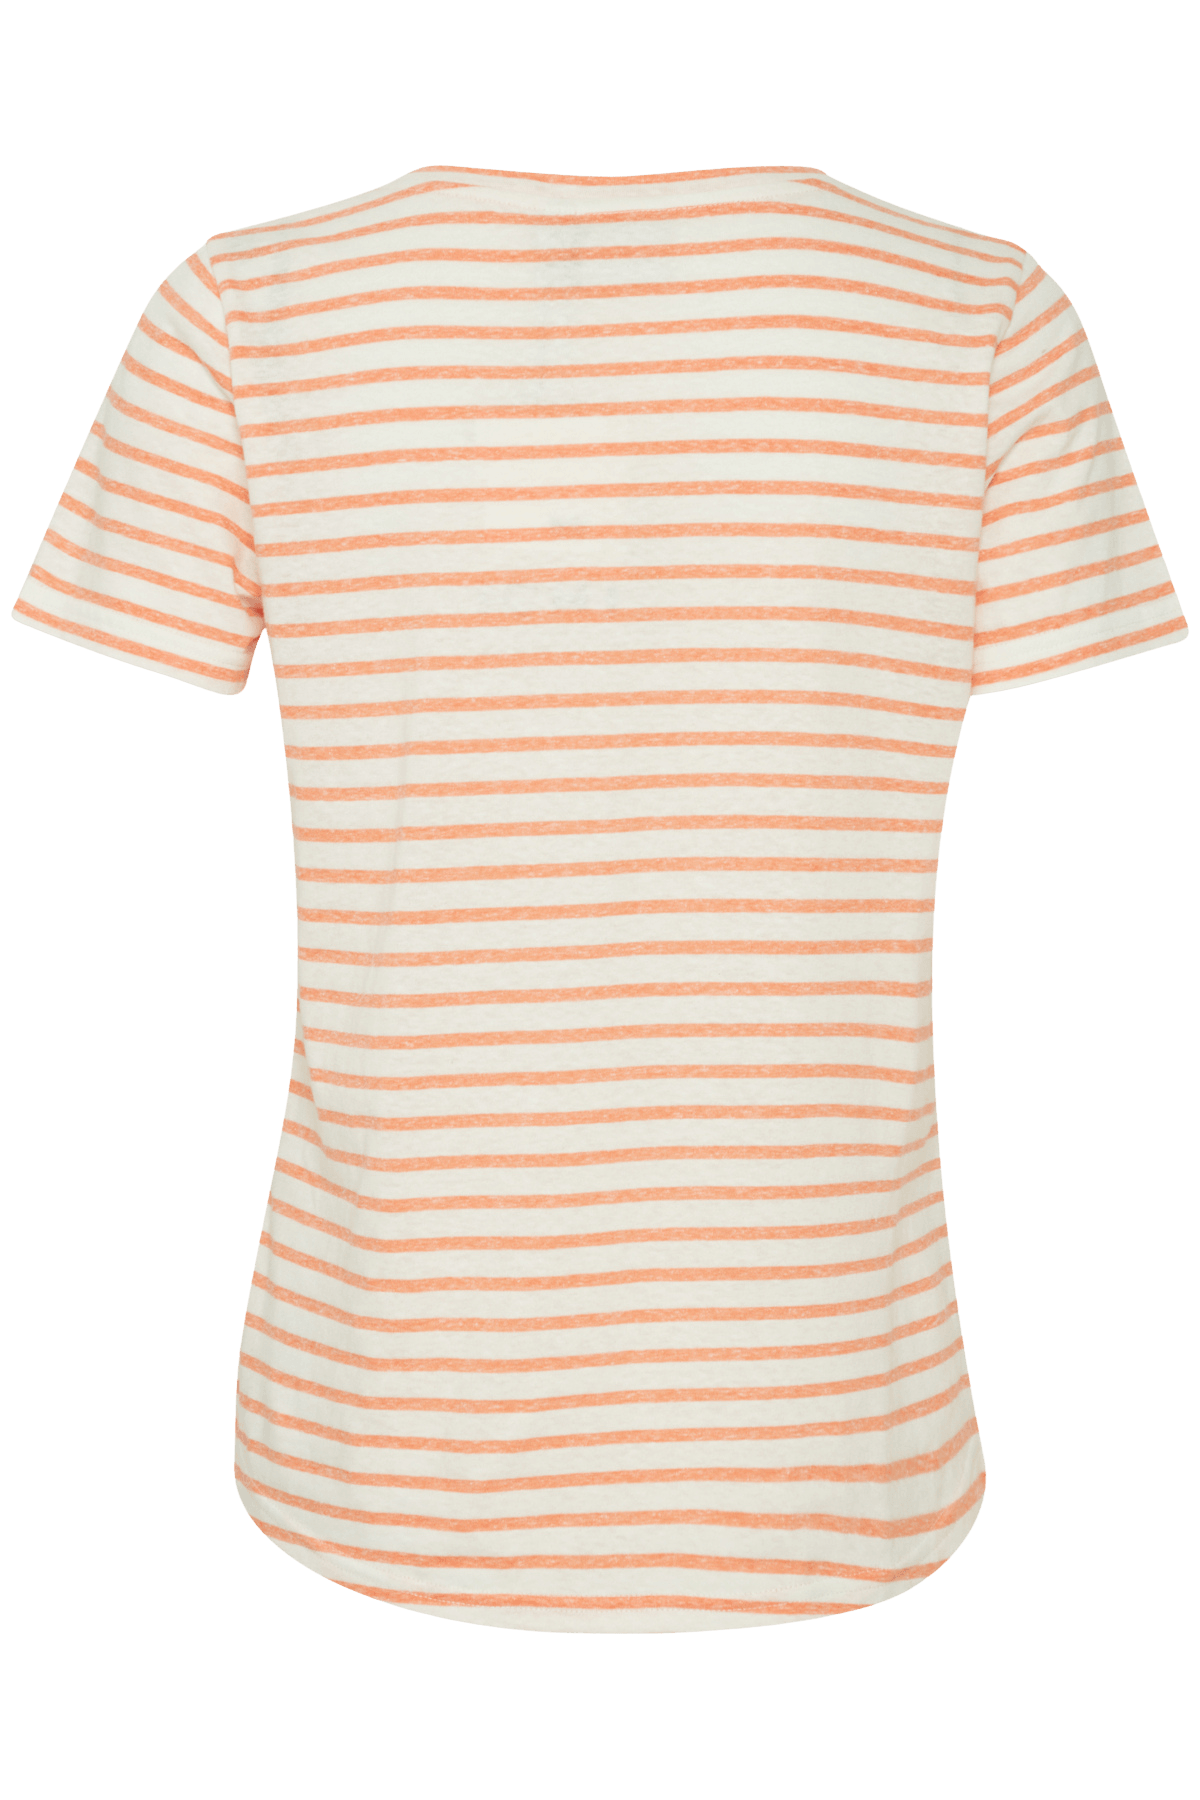 Camiseta ICHI Yulieta Coral Rose Stripes - ECRU